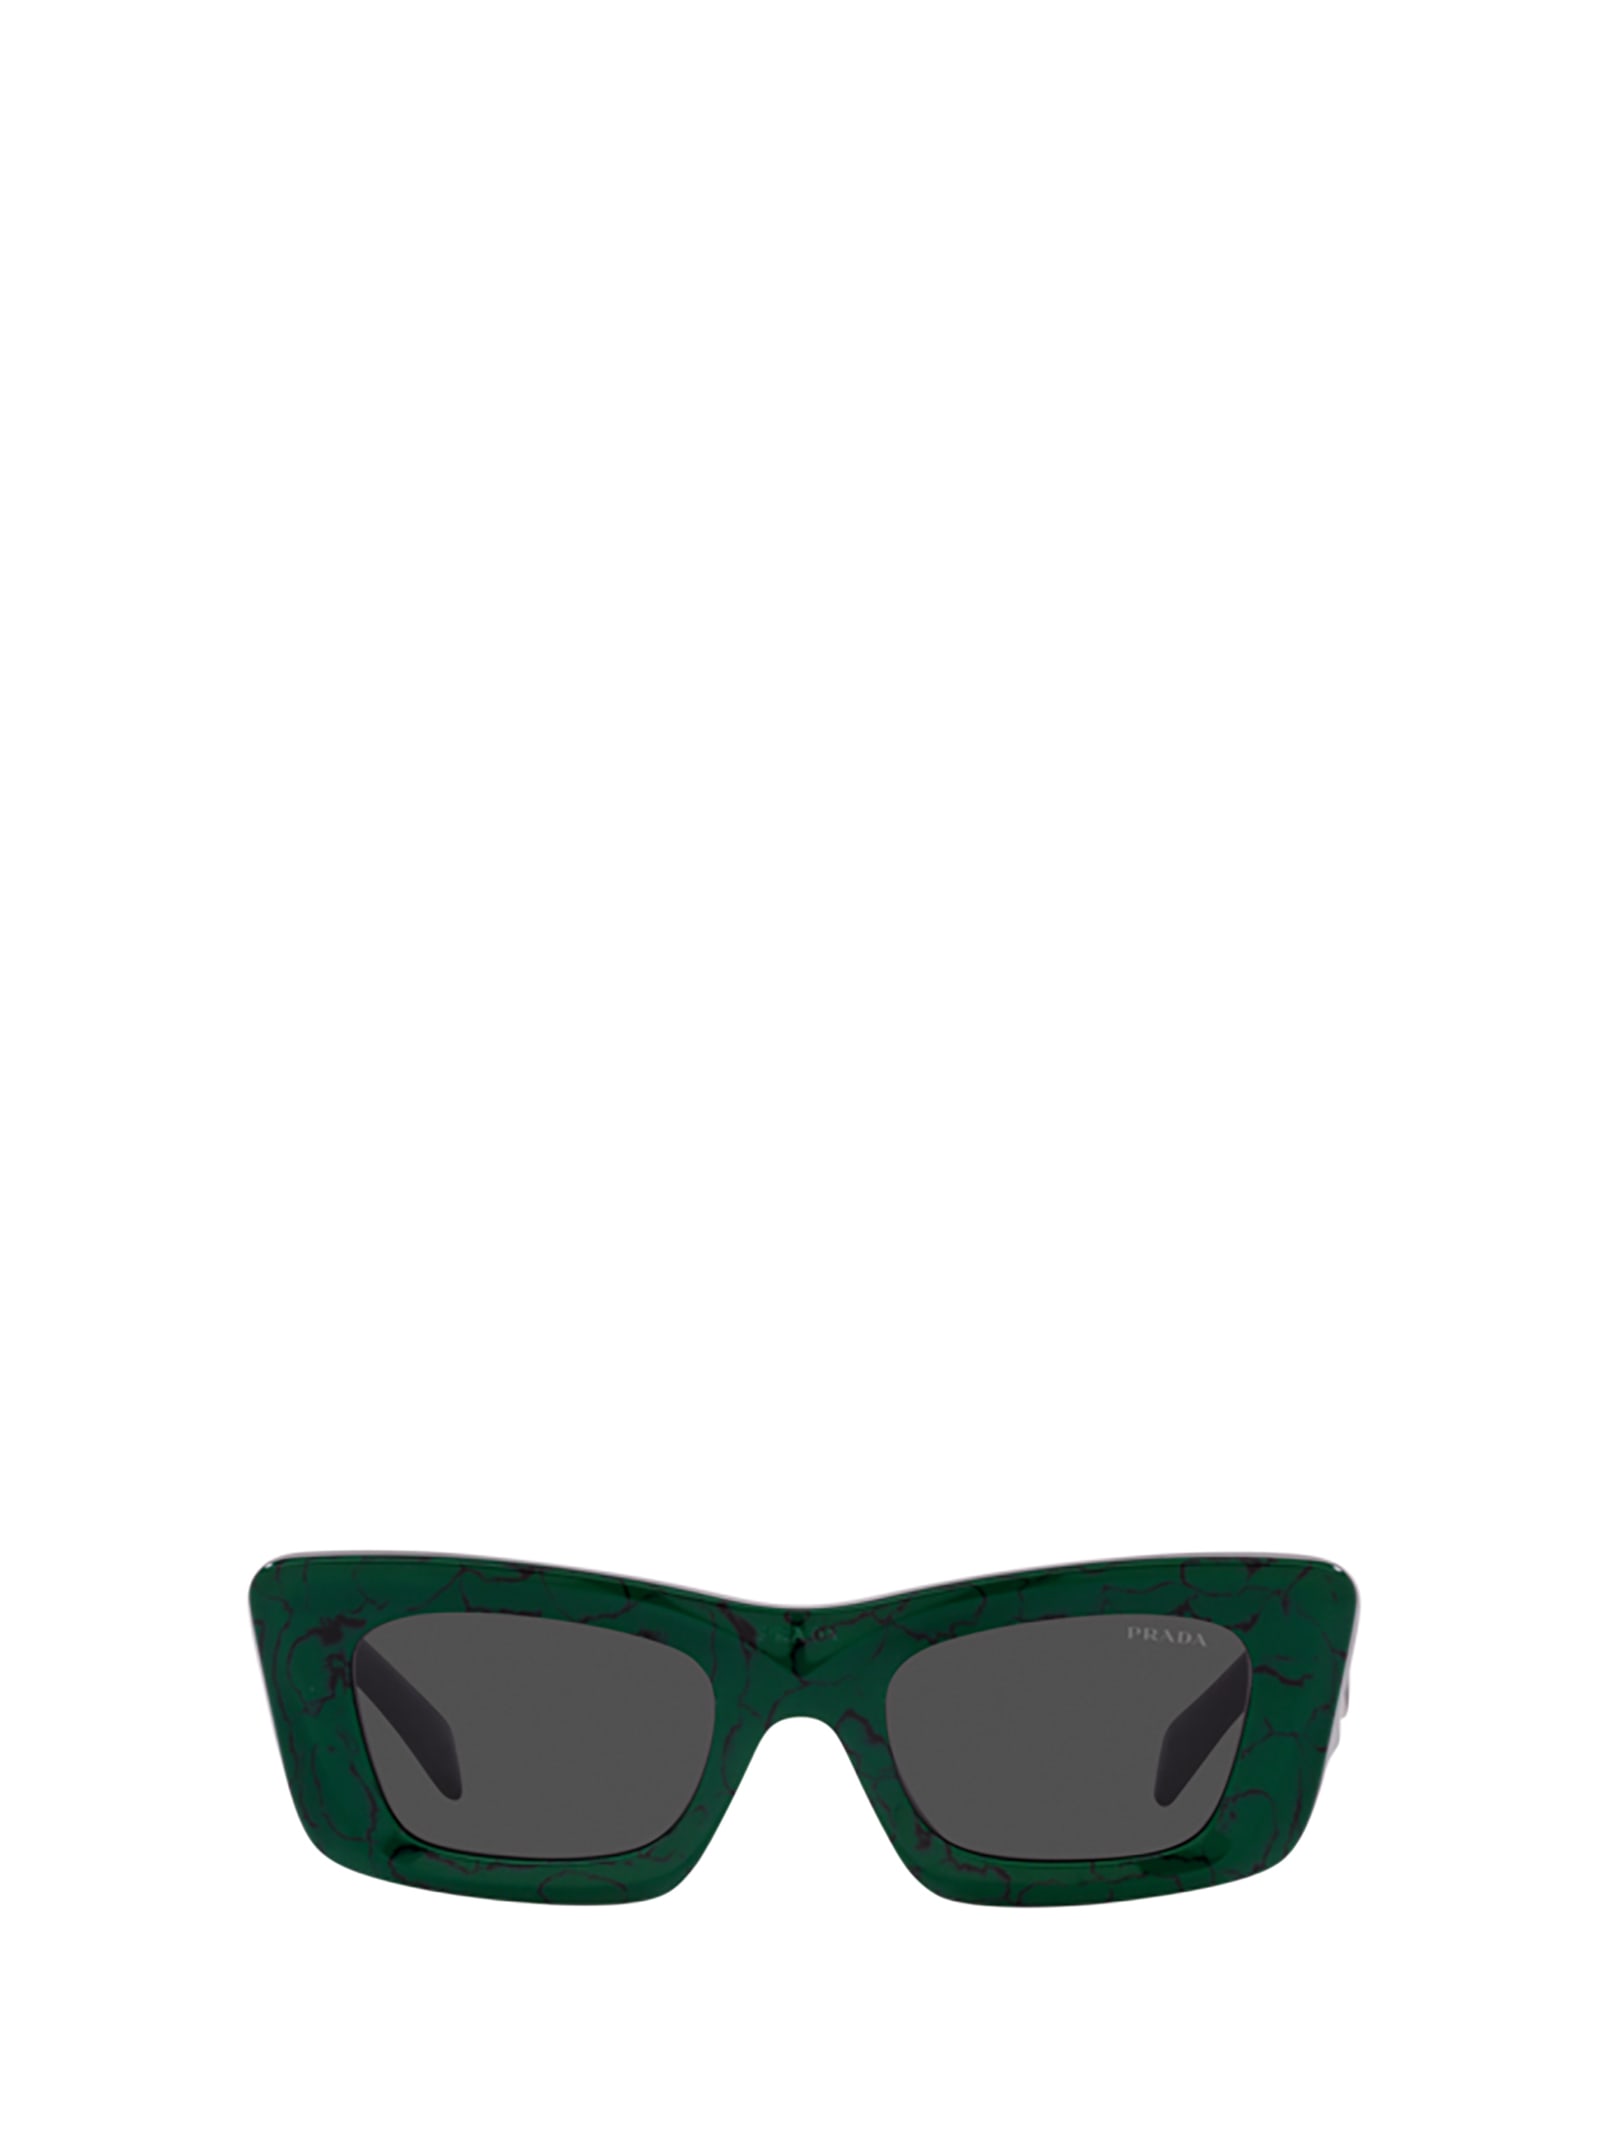 Prada Eyewear Pr 13zs Green Marble Sunglasses